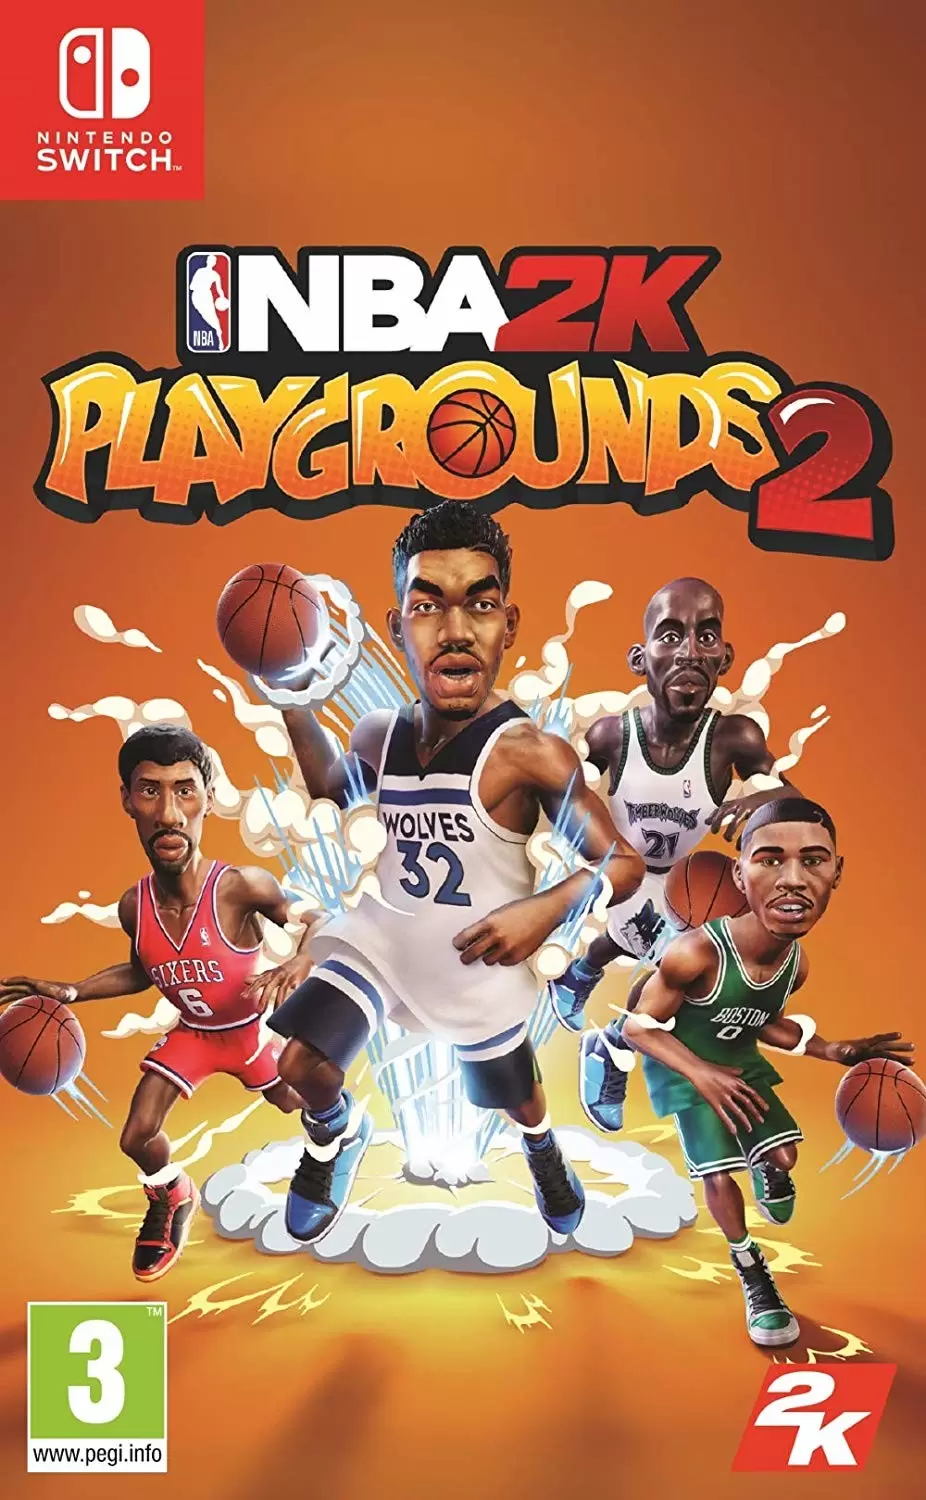 Jeux Nintendo Switch - NBA 2k Playgrounds 2